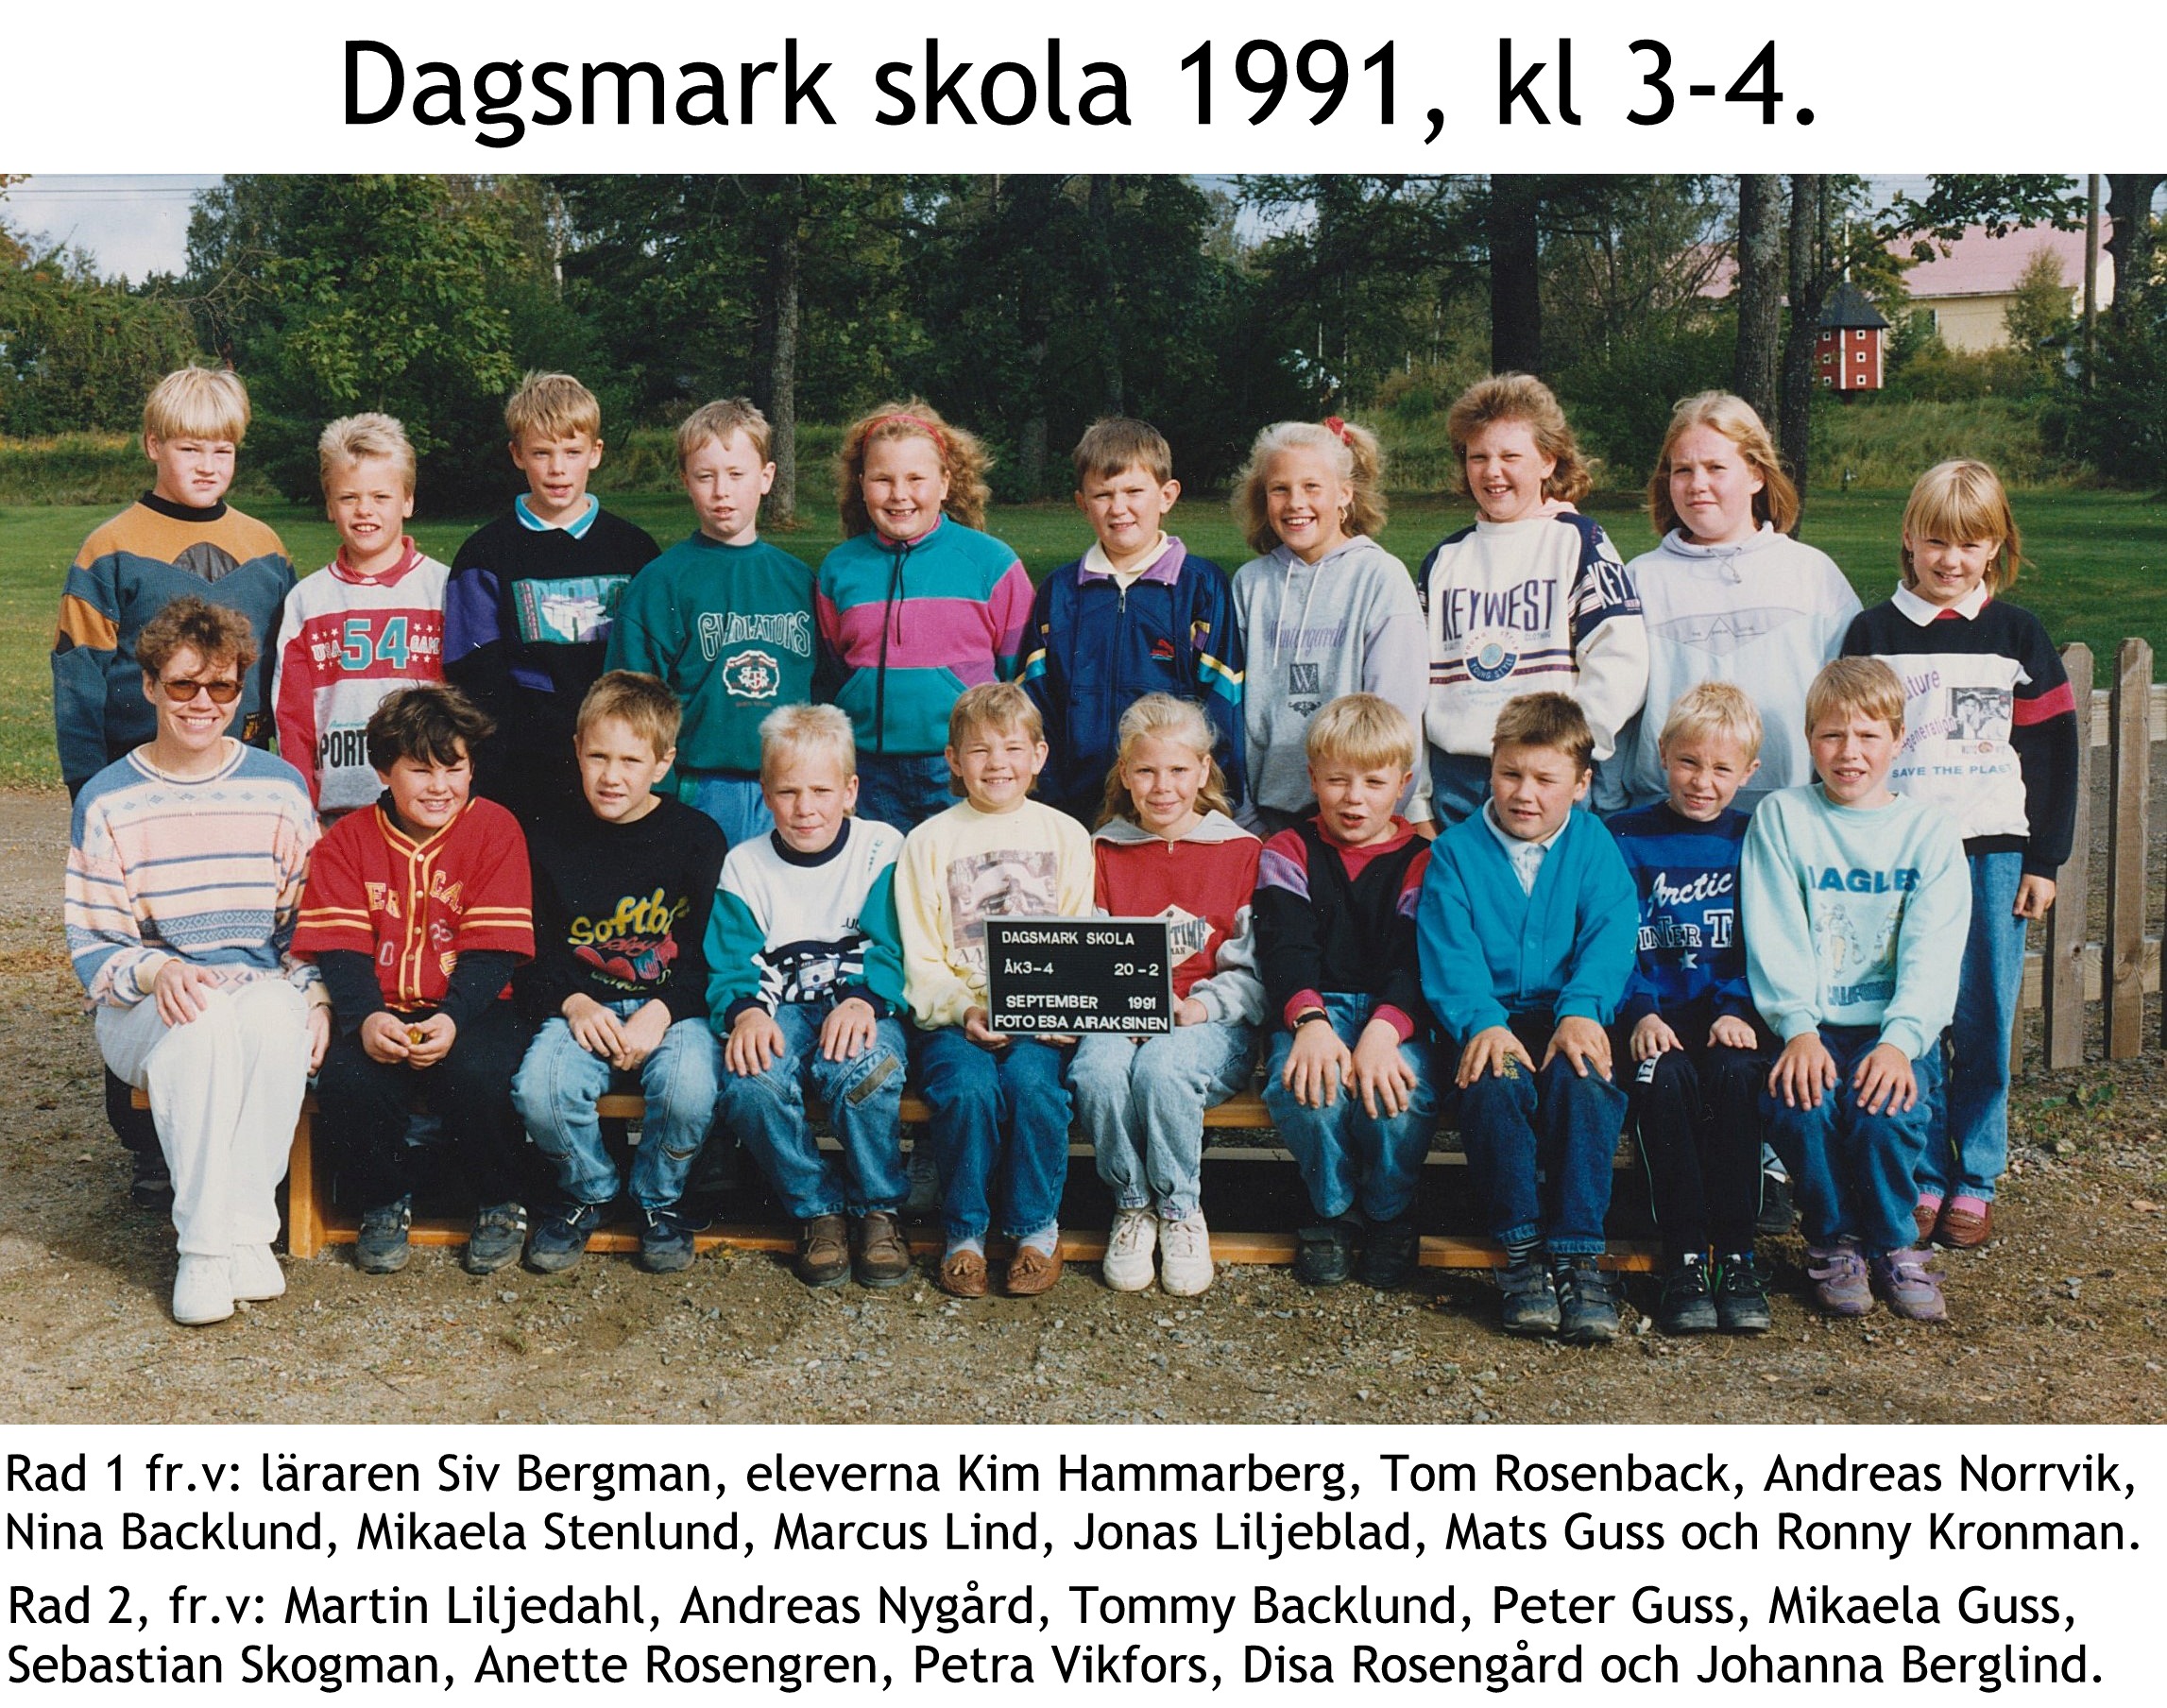 1991 Dagsmark skola kl 3-4